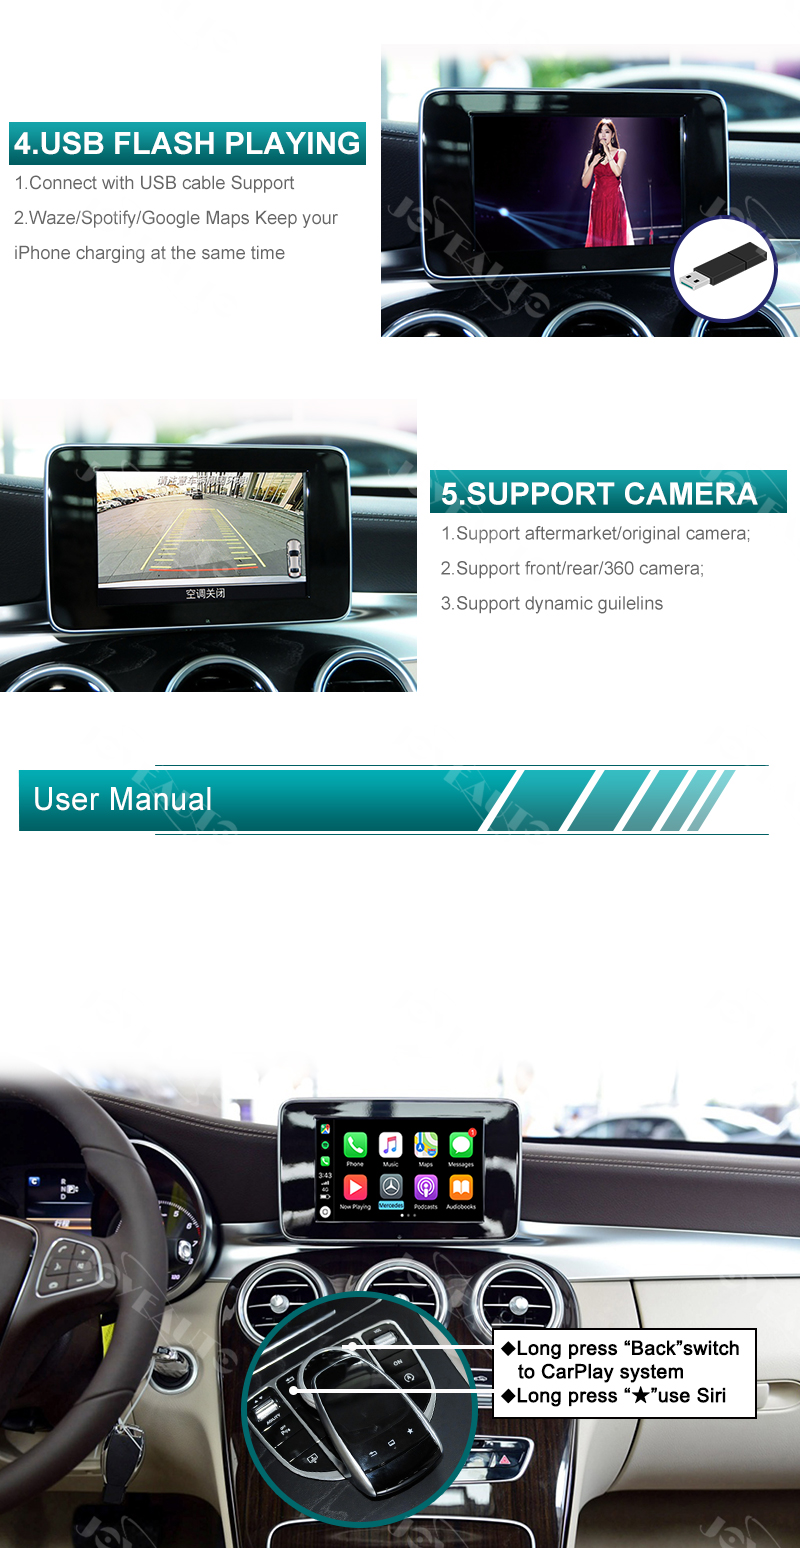 Mercedes C W205 GLC V W253 COMAND NTG5.5 Carplay Android auto, DAB